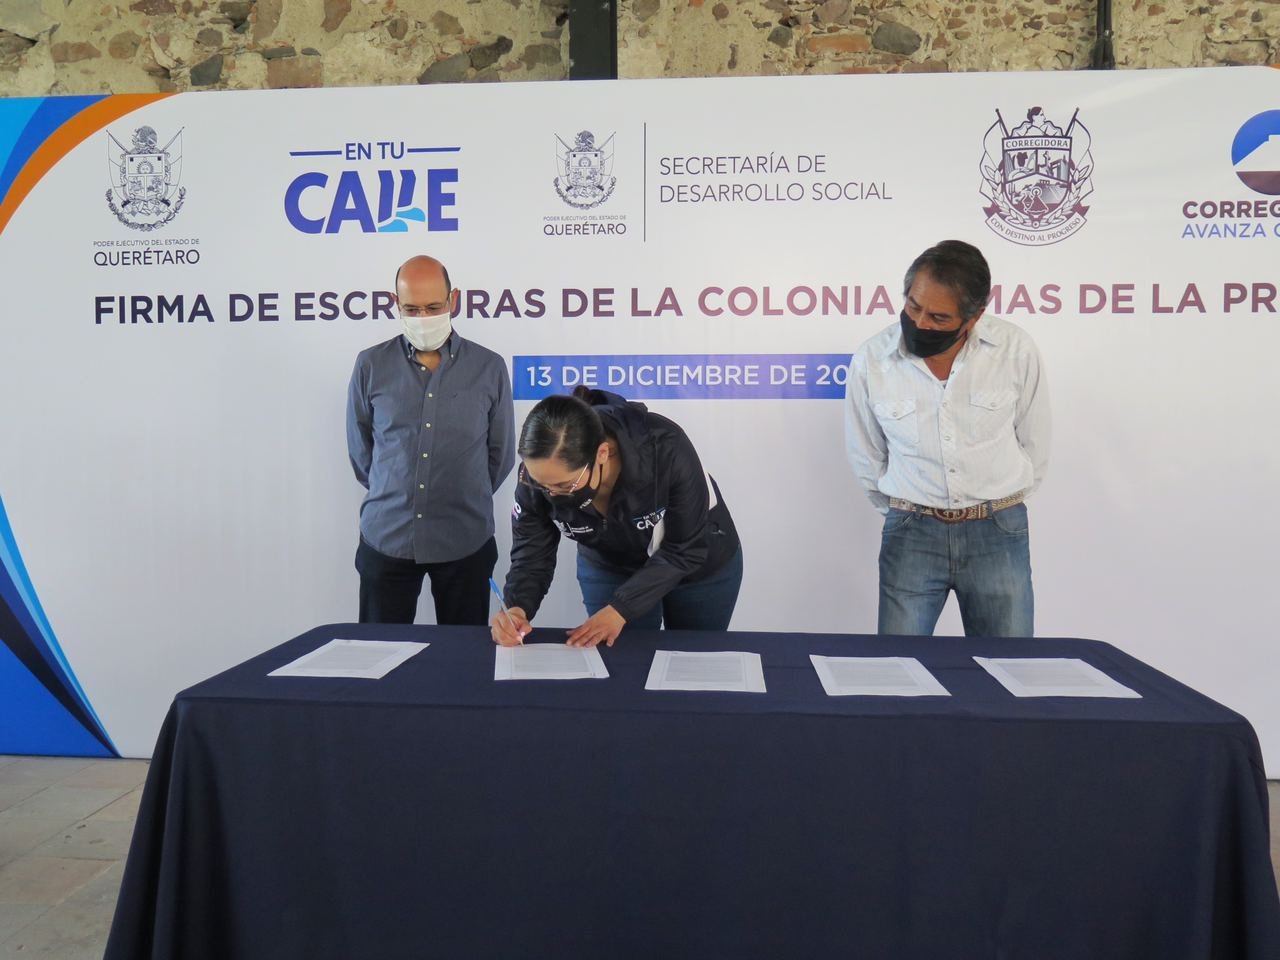 Firman escrituras para regularizar viviendas de Lomas de la Presa